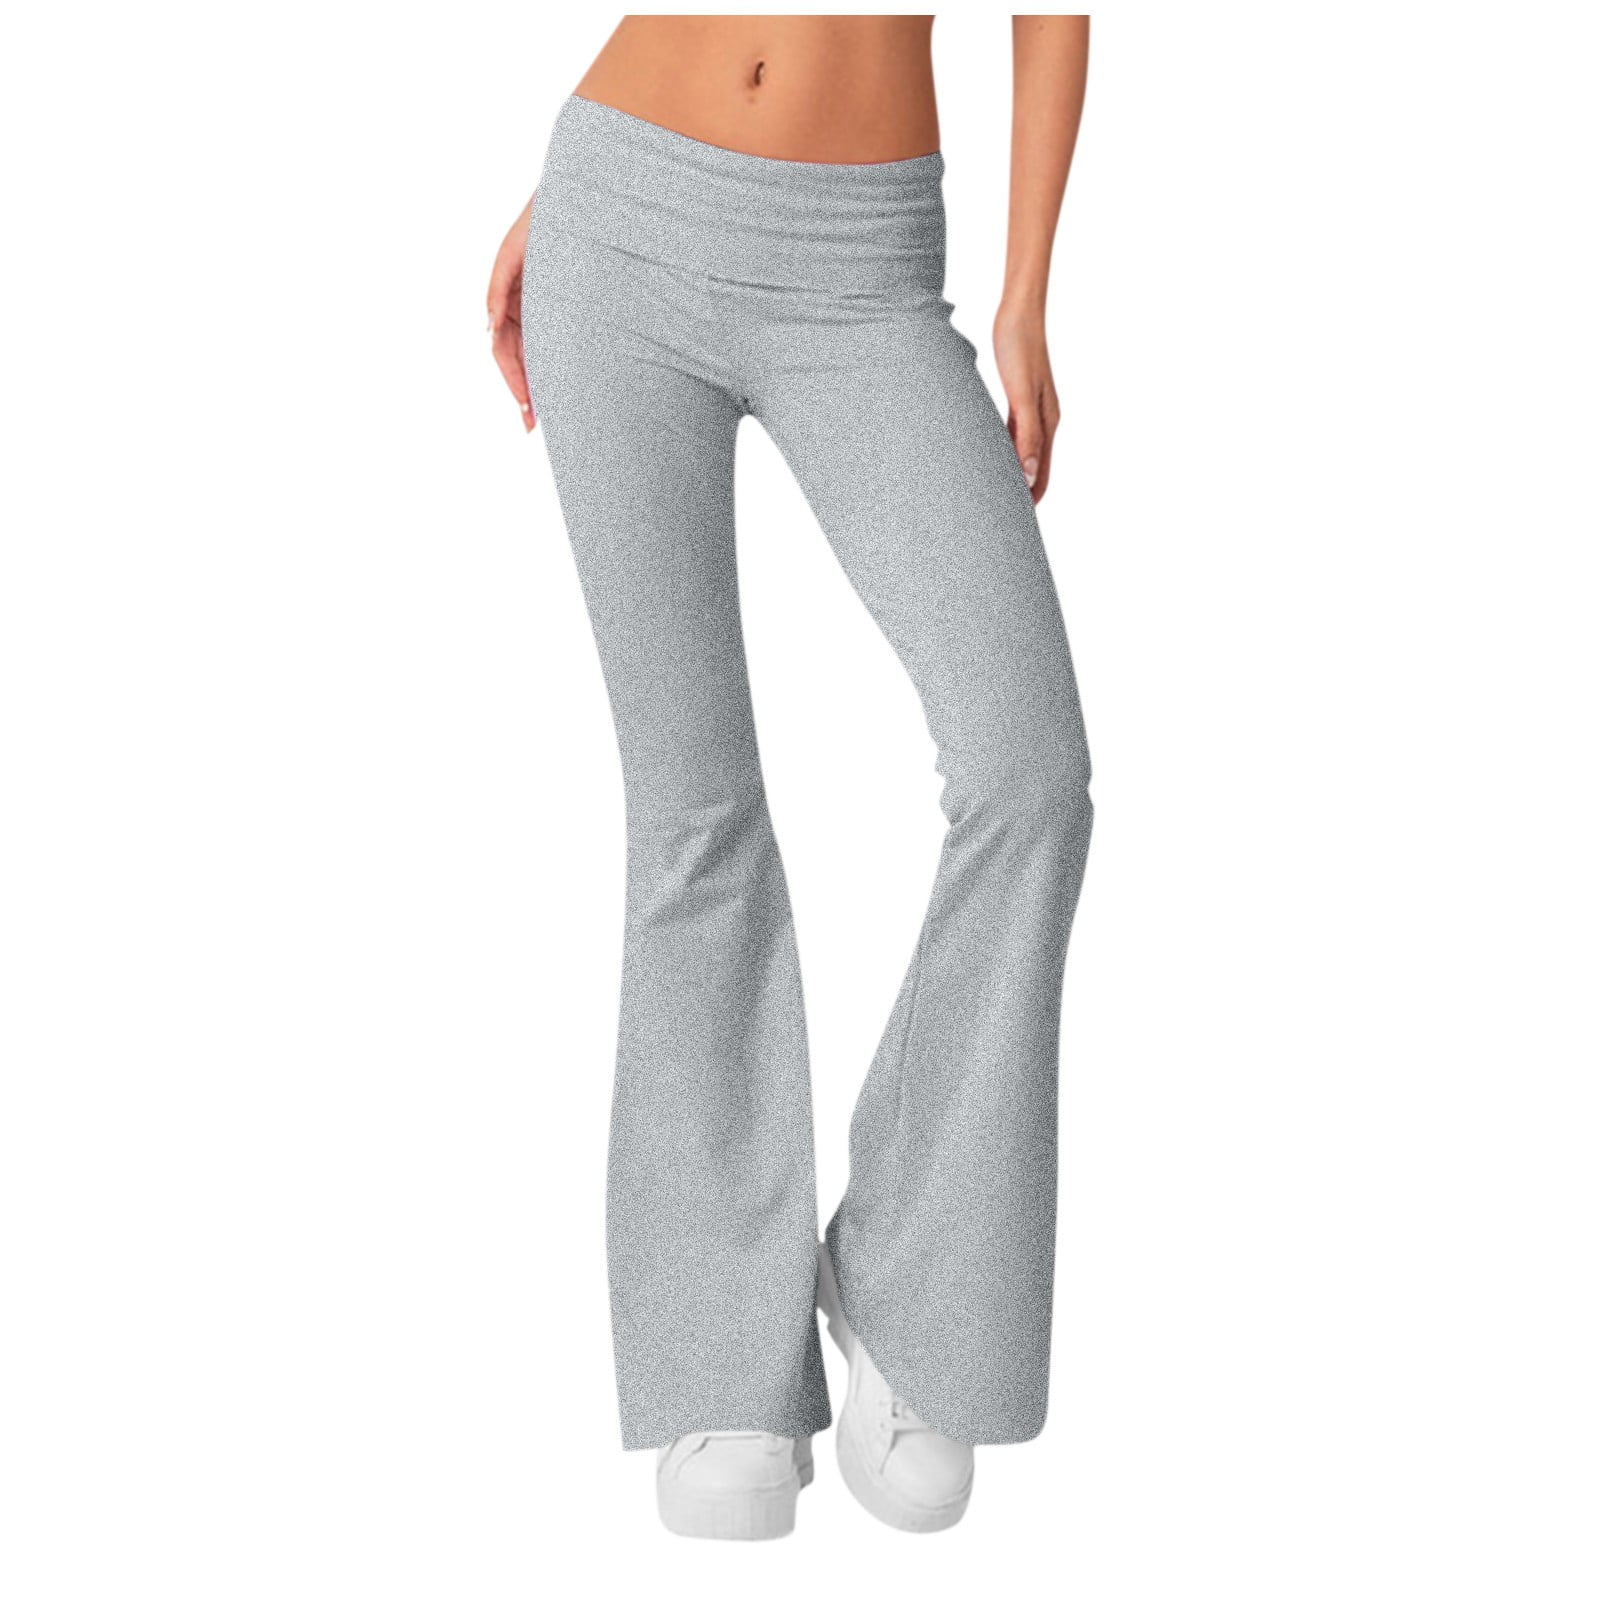 Mlqidk Women 's Flare Skinny Pants Fold Over Leggings Stretch Bootcut Bell  Bottom Yoga Pants Y2k Joggers Light Gray S